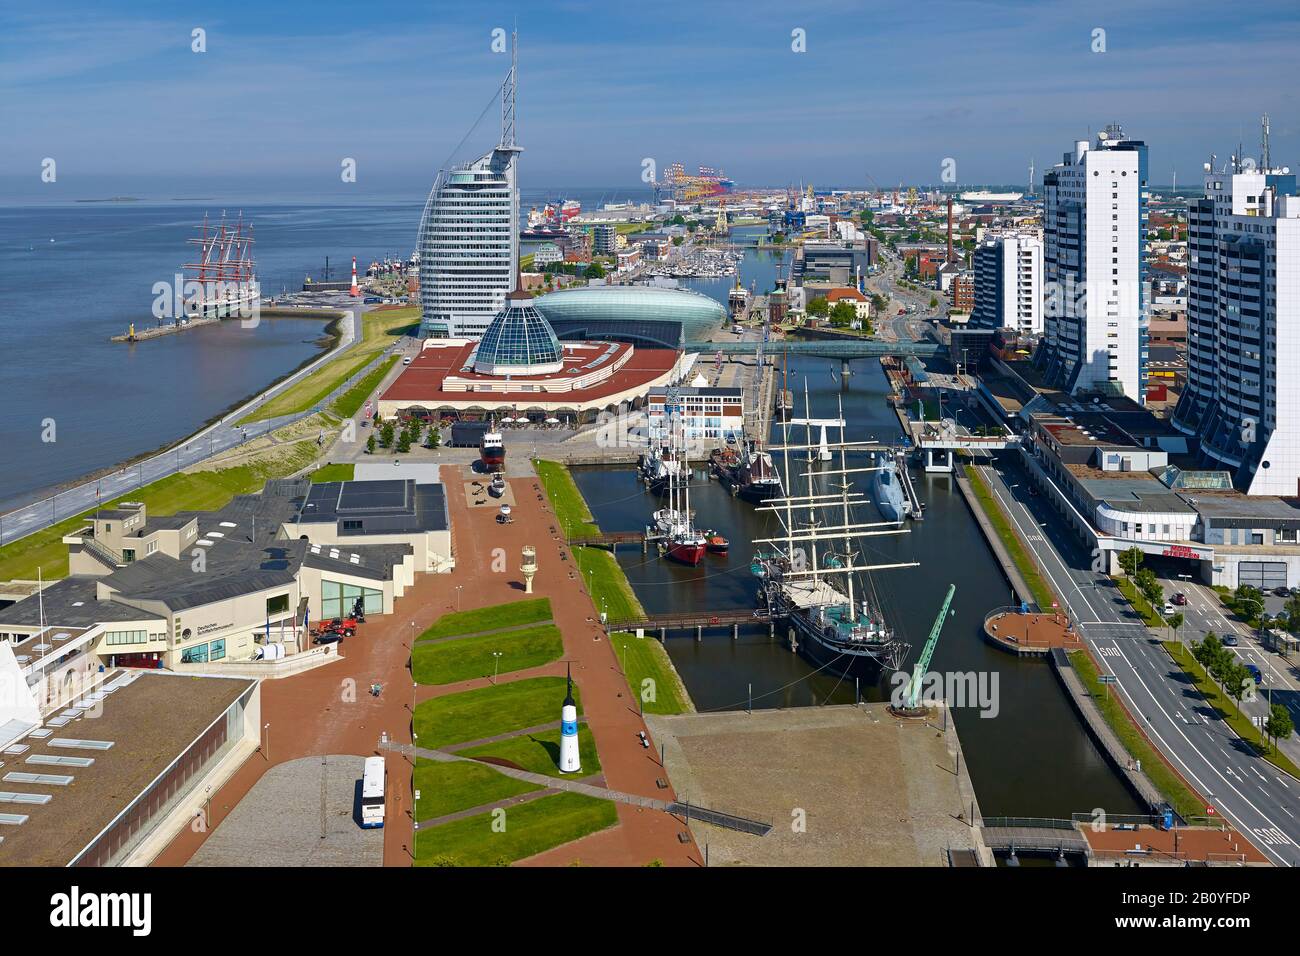 Vista Sulla Città Di Museumshafen, Atlantic-Sail-City-Hotel, Klimahaus, Columbus Center, Bremerhaven, Brema, Germania, Foto Stock